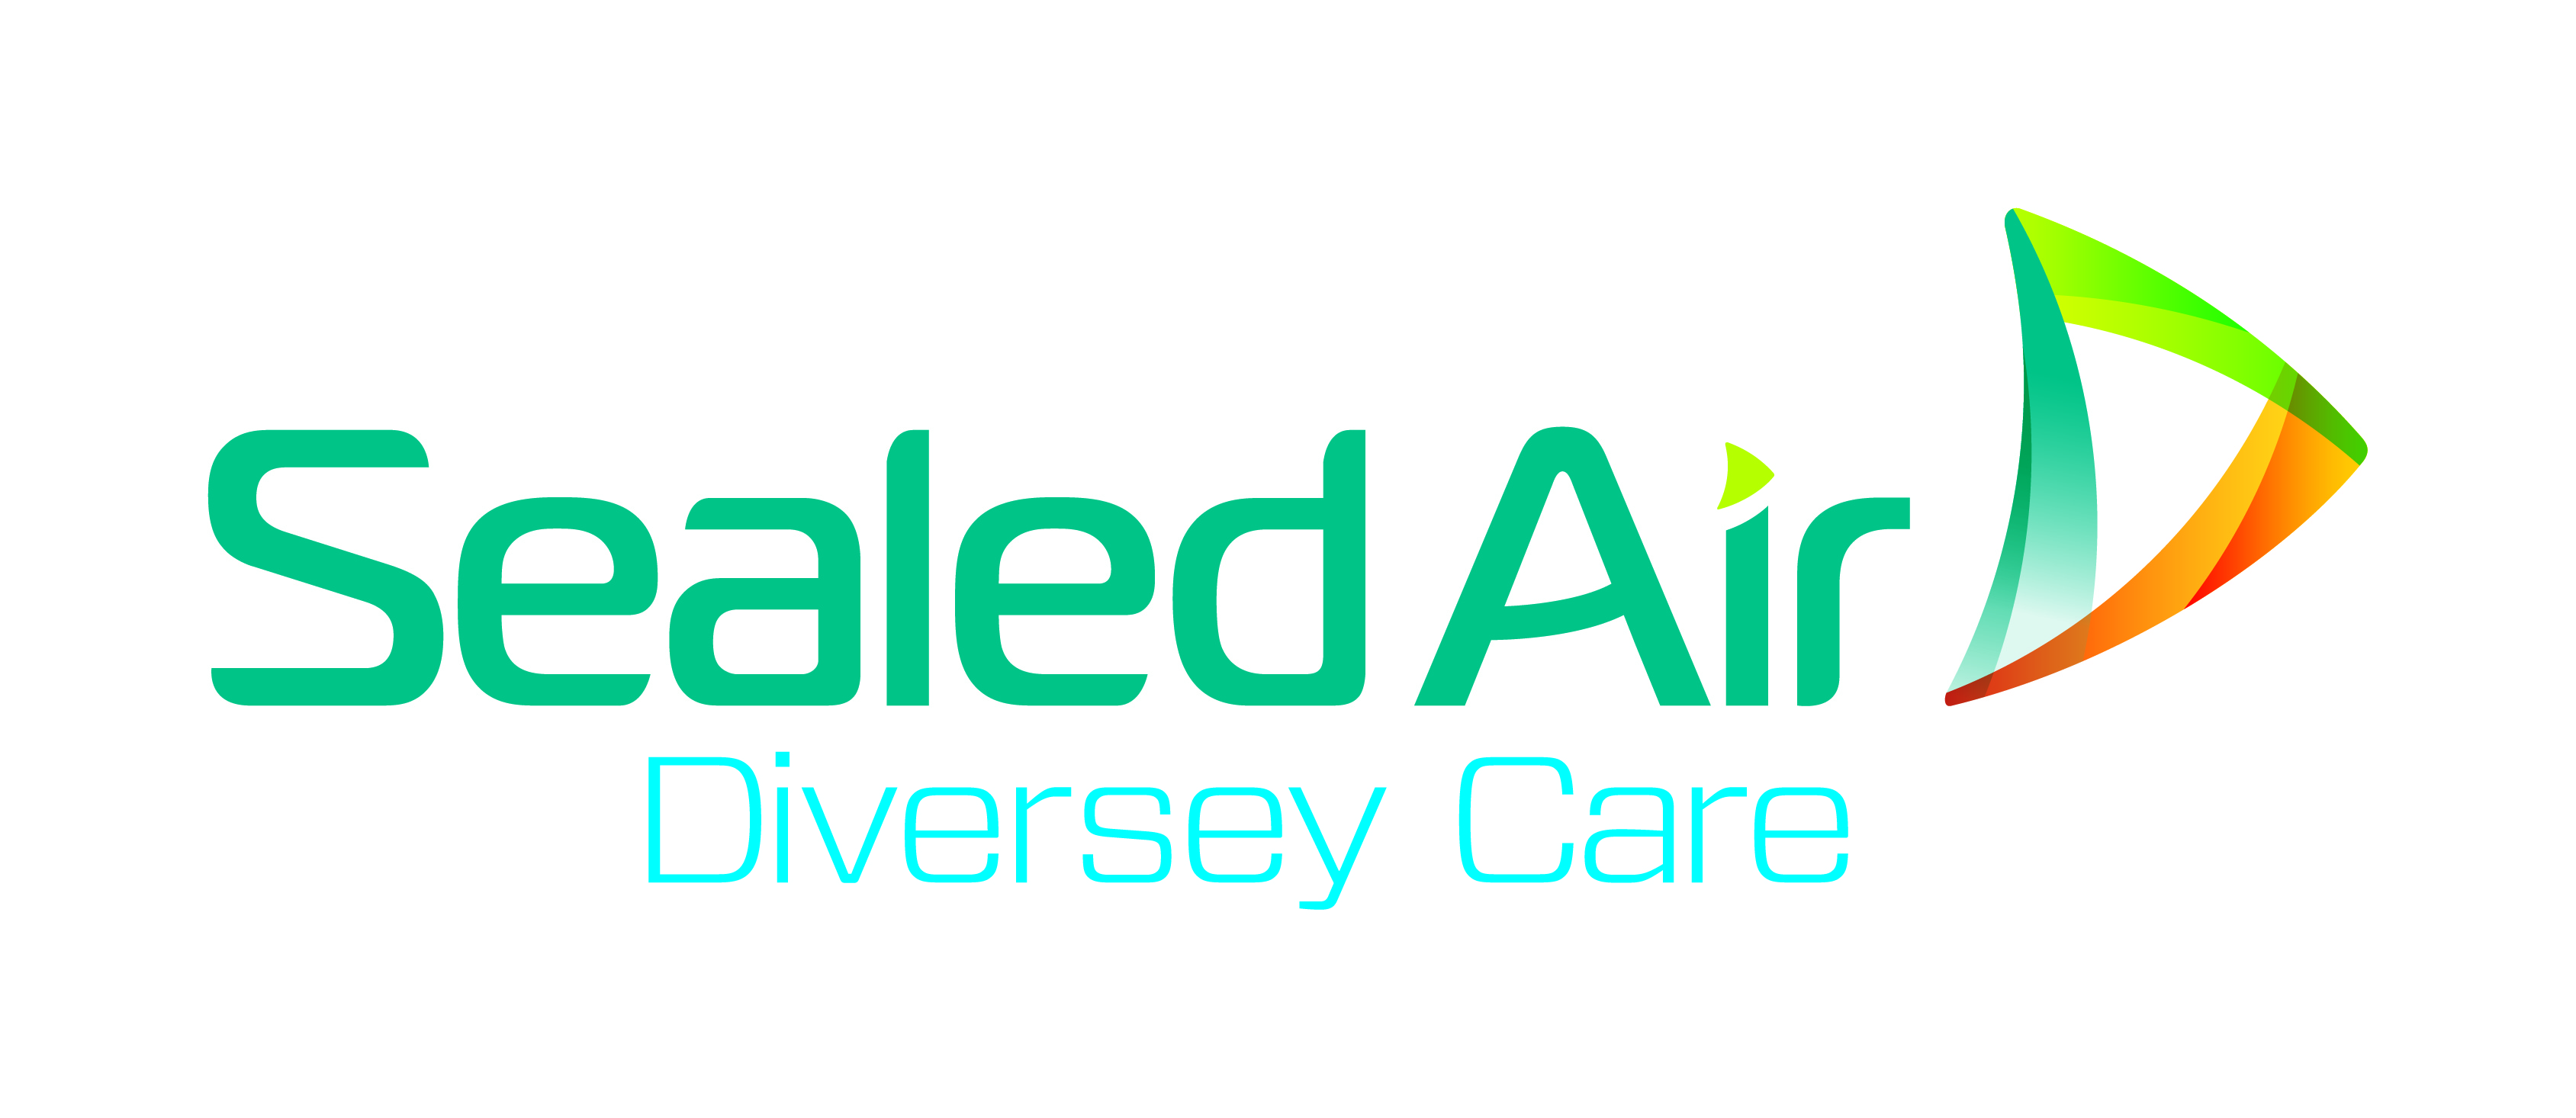 Sealed Air Diversey Care Logo farbig CMYK 300dpi